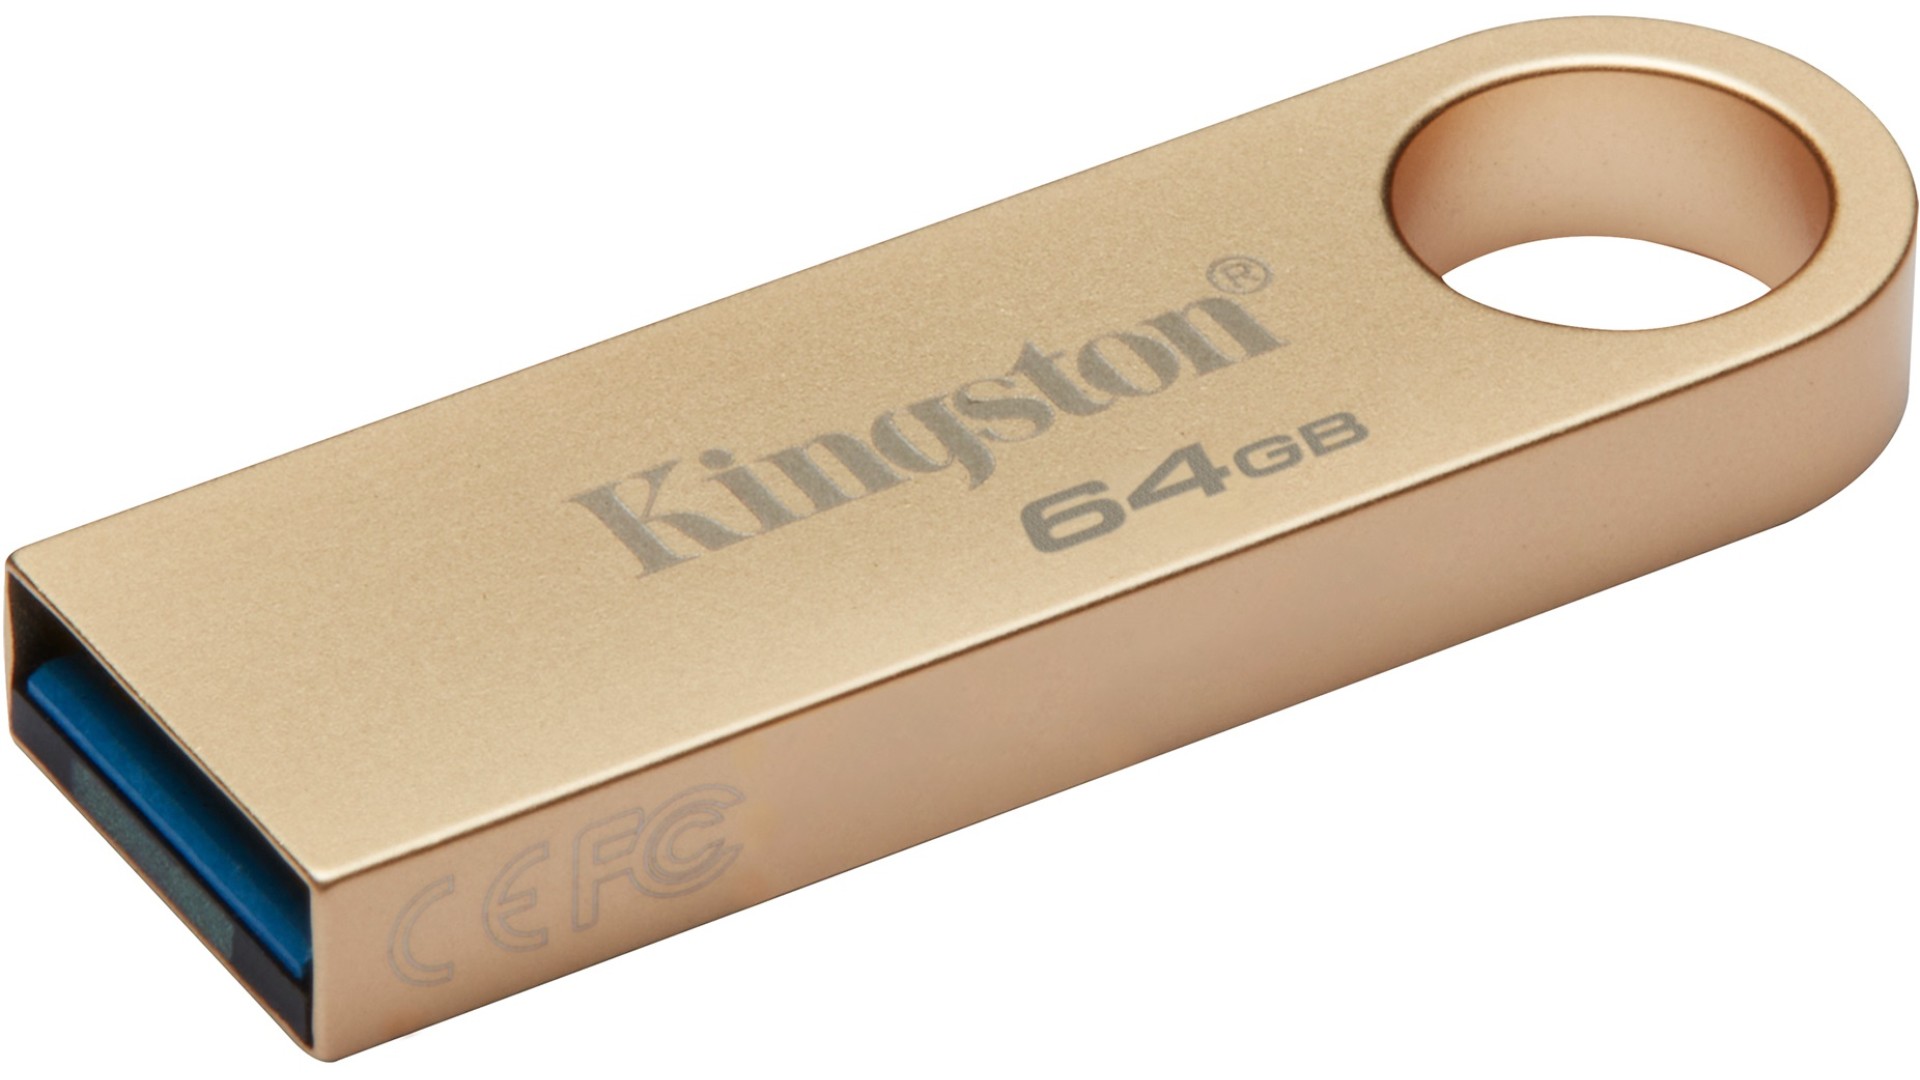 USB ბარათი Kingston   64GB DataTraveler SE9 G3